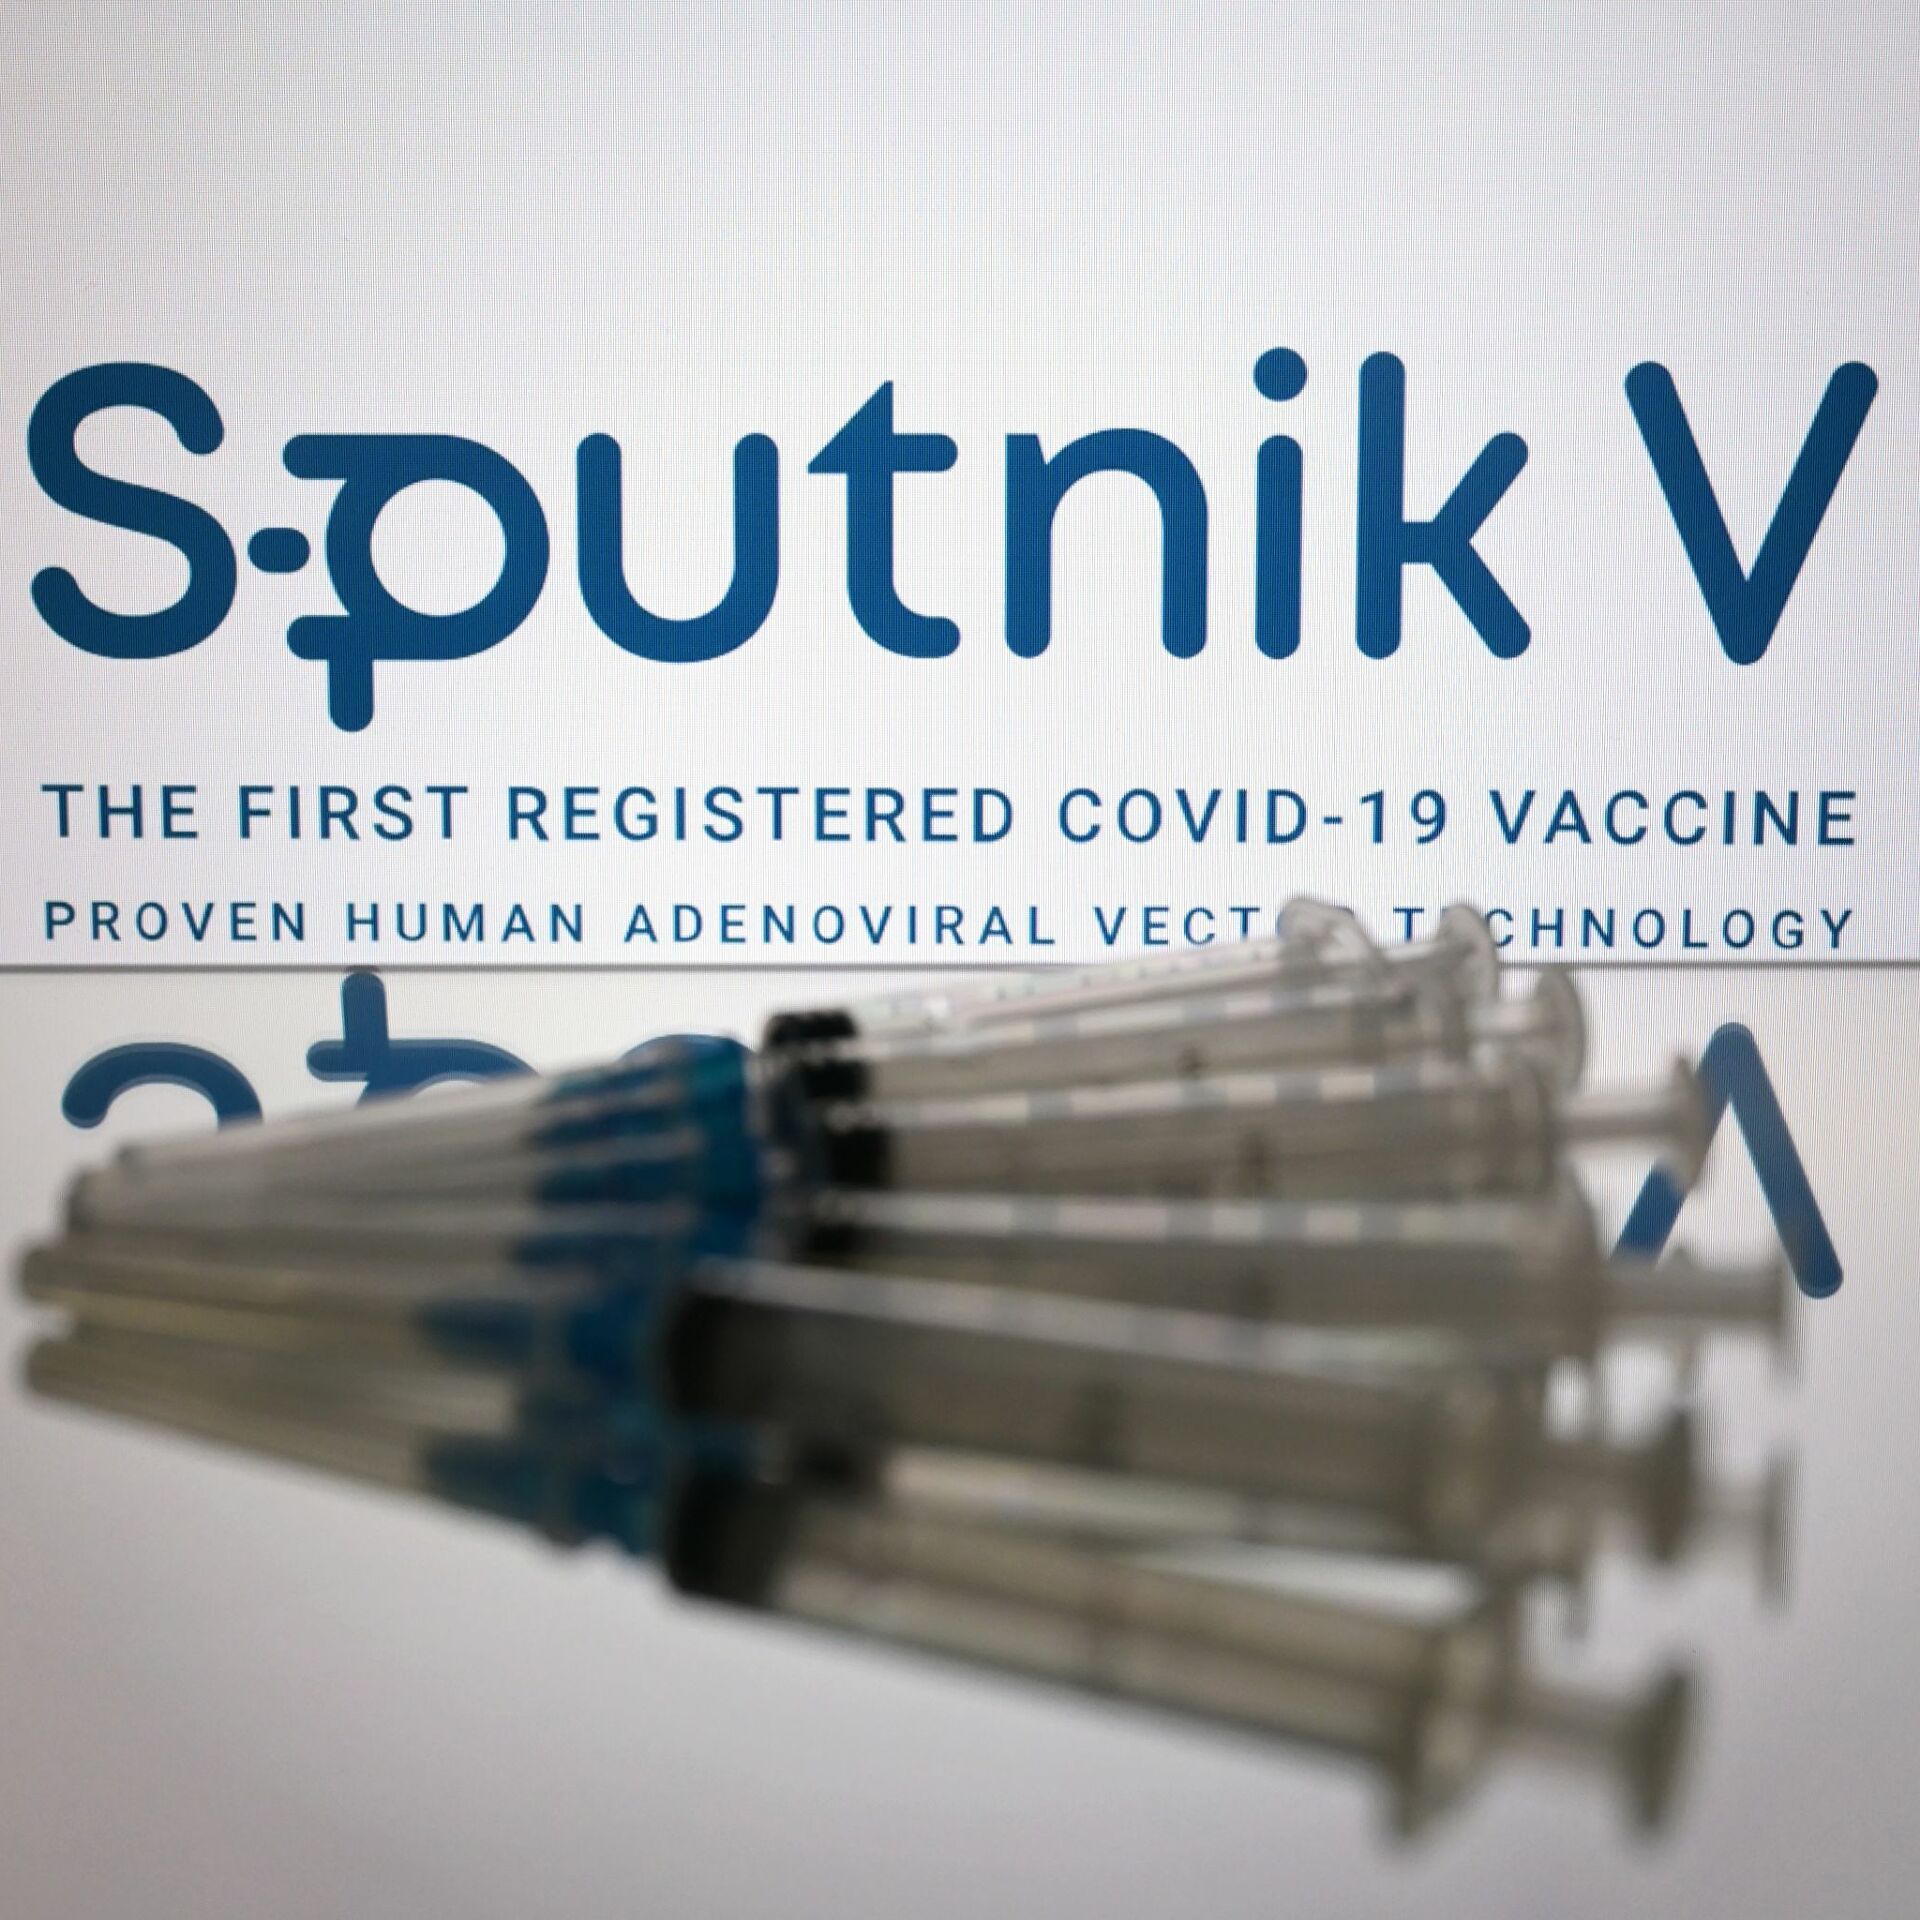 Спутник сайт. Спутник 5 вакцина. Спутник вакцина логотип. Эмблема вакцины Спутник v. Спутник v логотип.